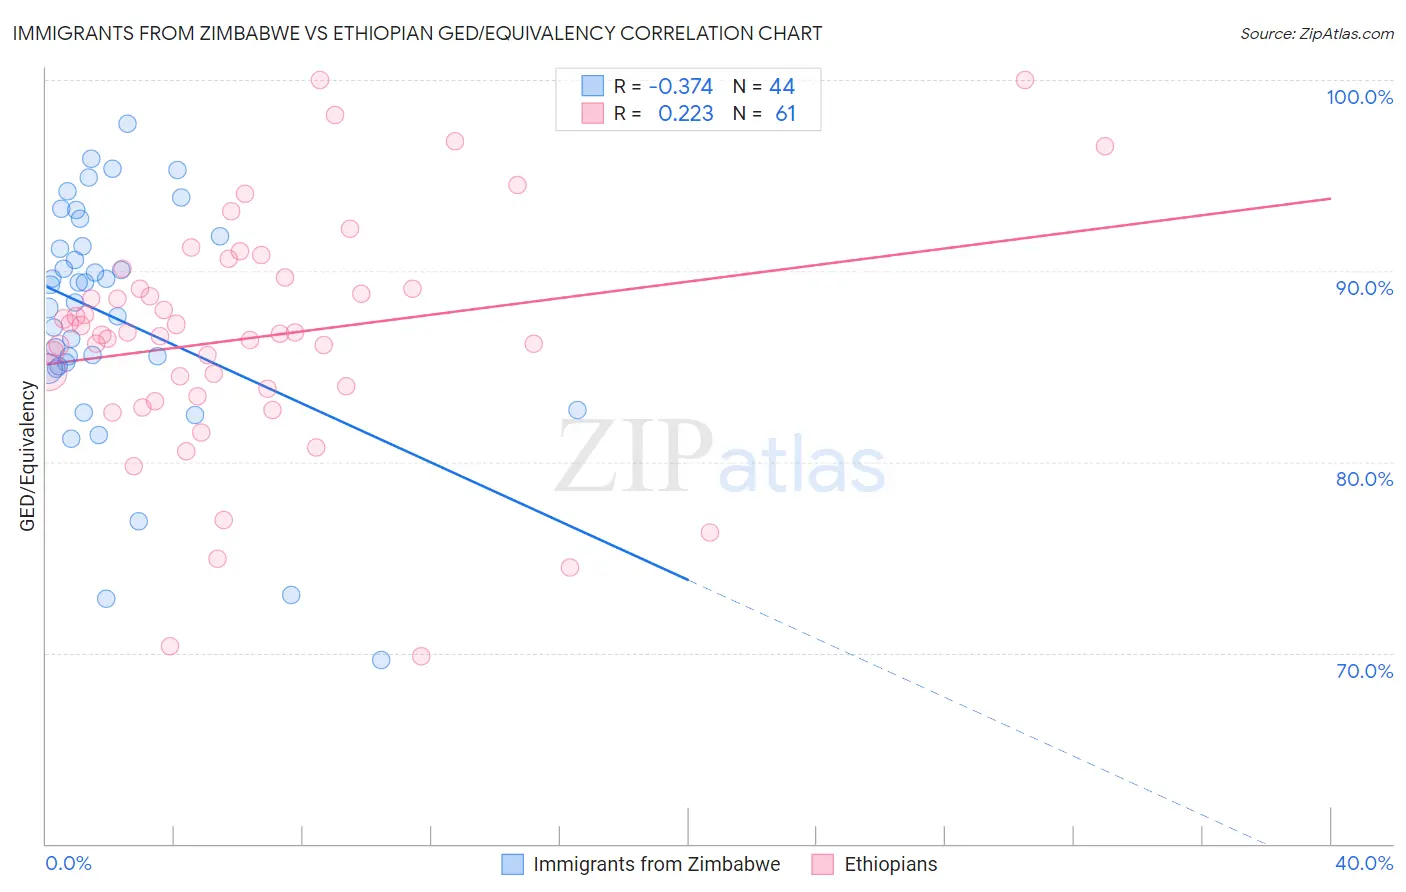 Immigrants from Zimbabwe vs Ethiopian GED/Equivalency